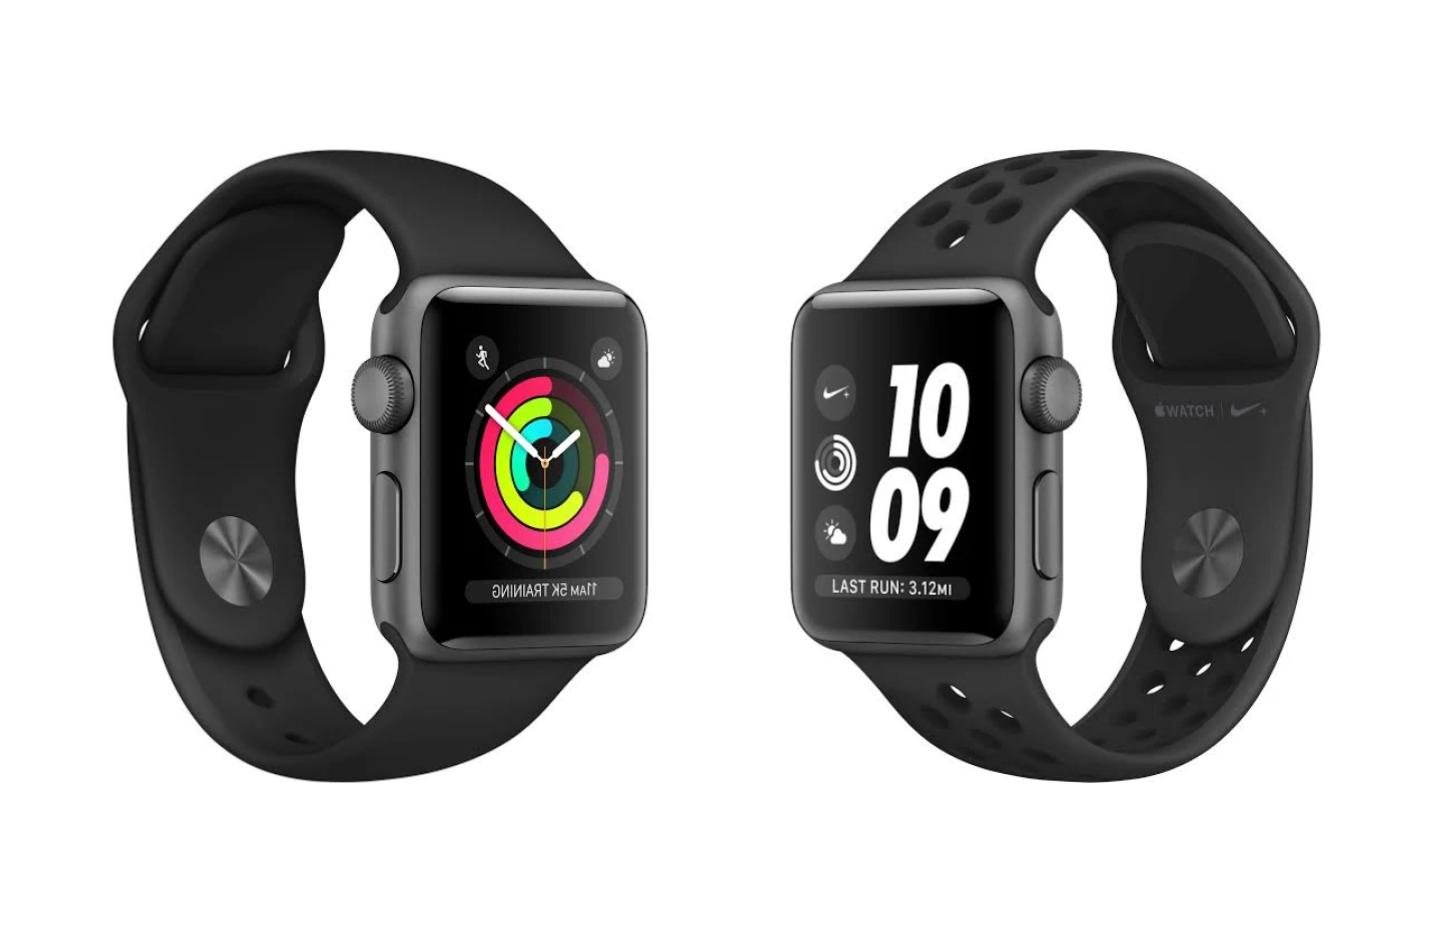 Watch часы 3 42mm. Apple watch Series 3 38mm. Apple watch Series 3 42 mm. Apple watch 3 42 mm Nike. Apple watch s2 Nike.